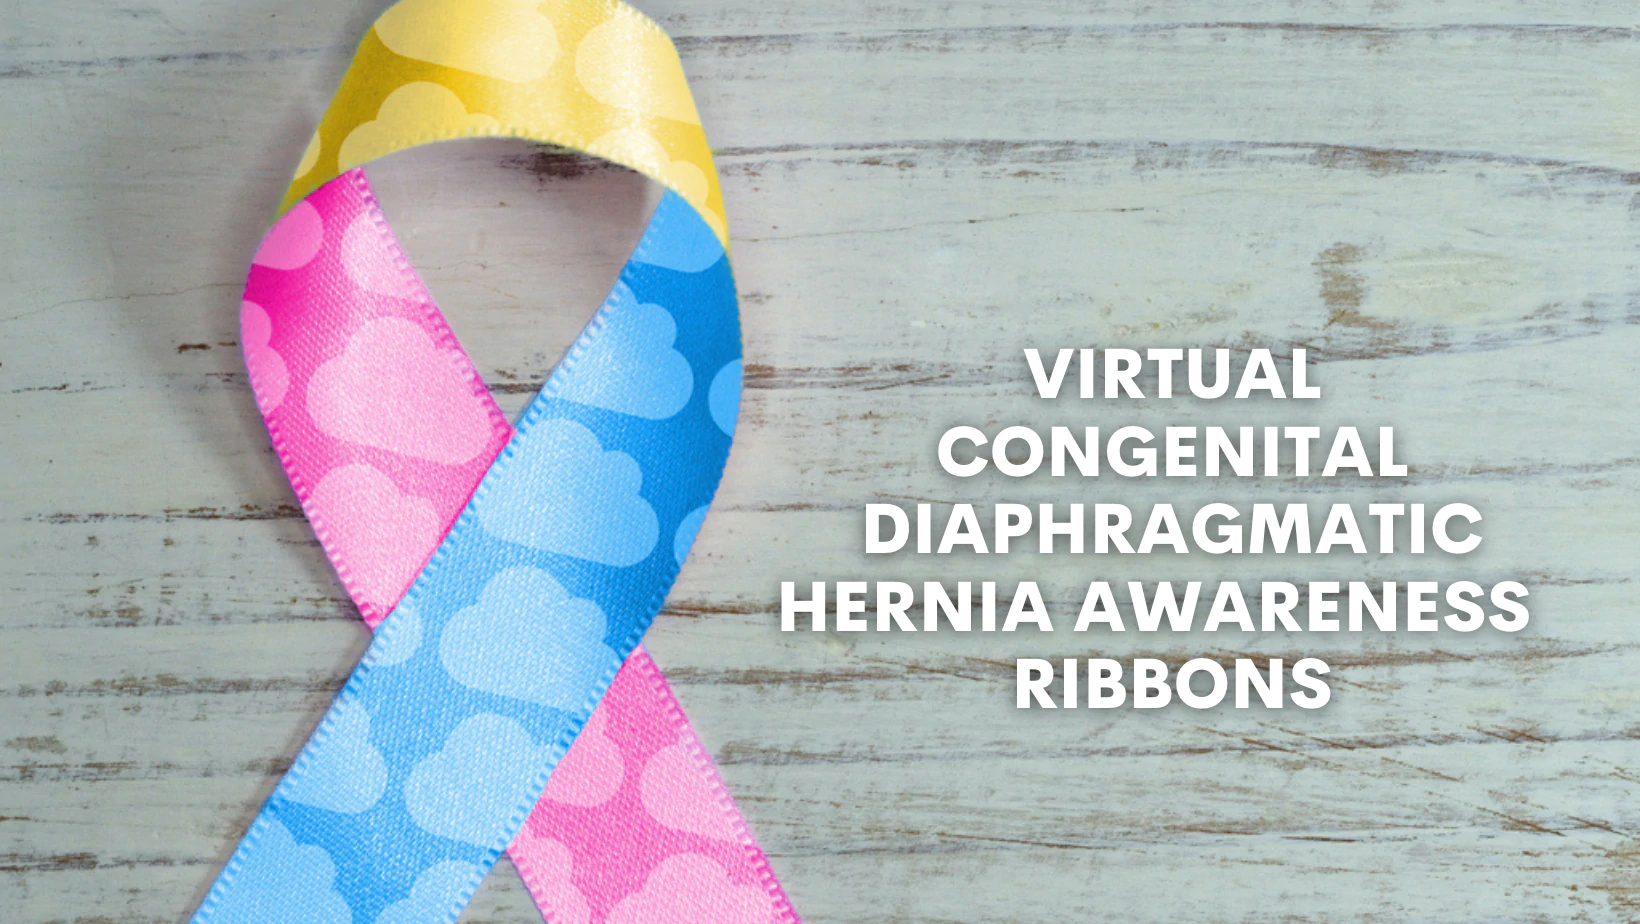 CDH International - A Global Initiative to Stop Congenital Diaphragmatic  Hernia - 2022 Virtual Congenital Diaphragmatic Hernia Awareness Ribbons